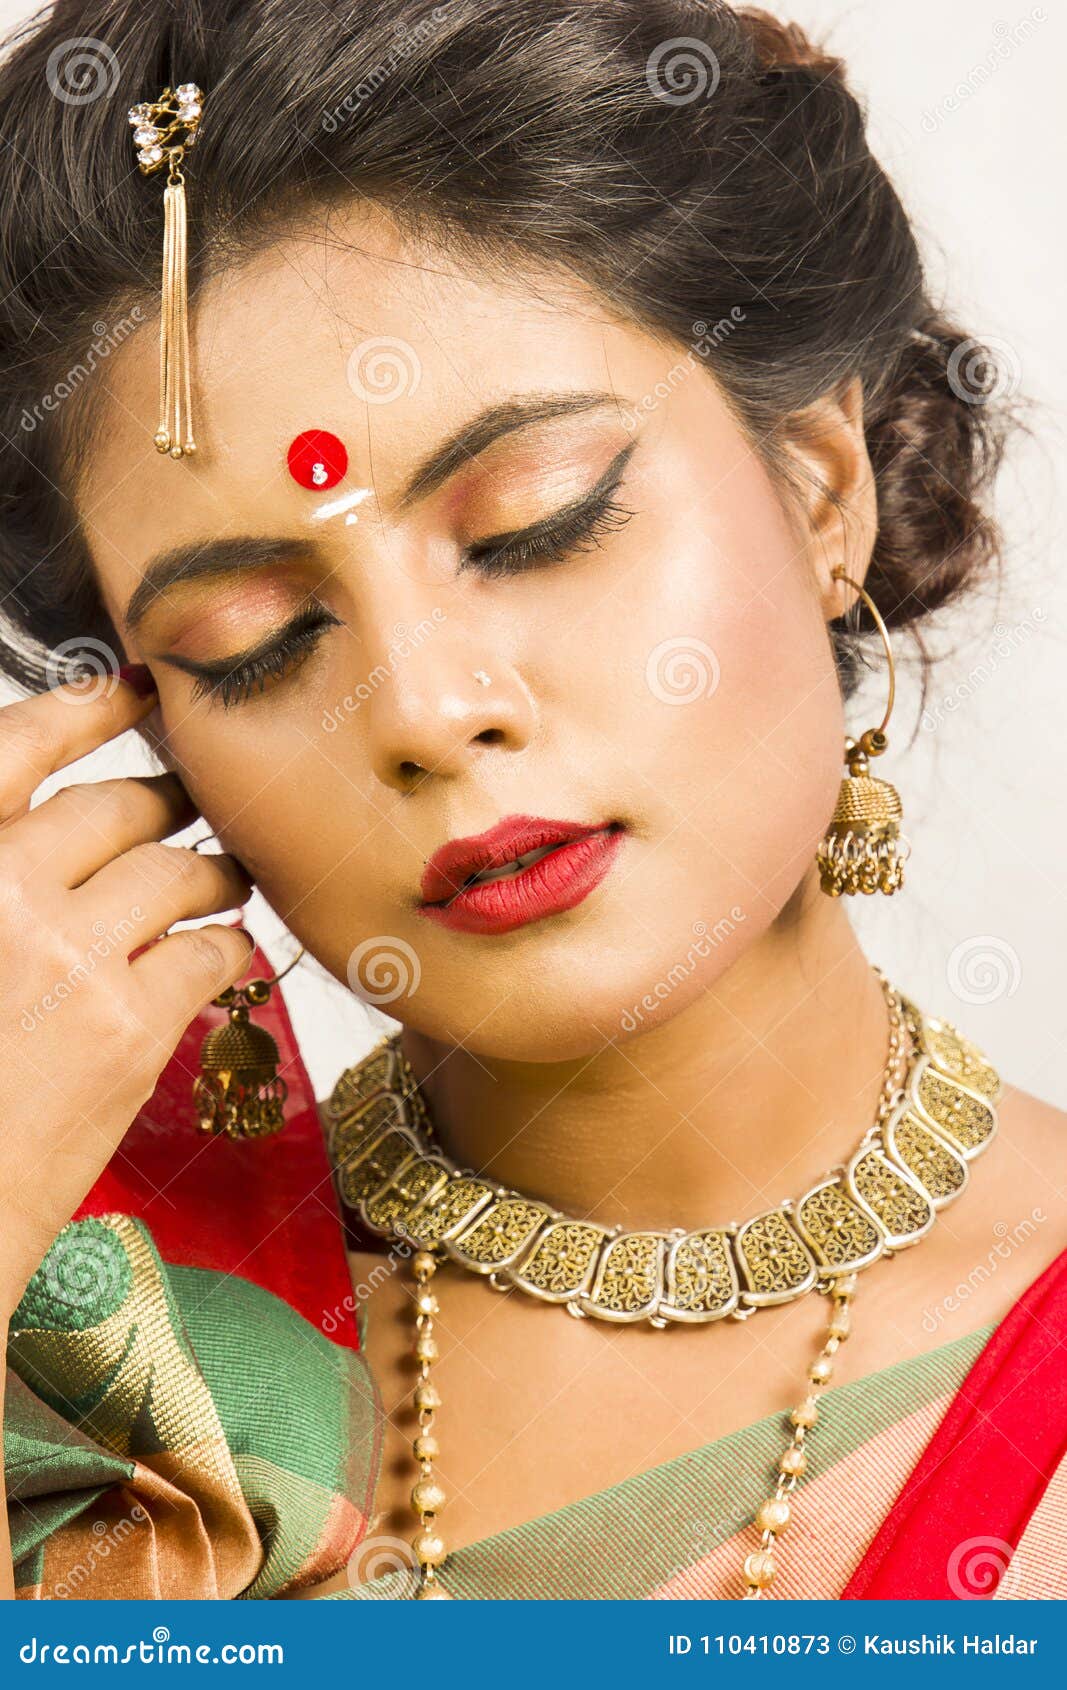 Ladies photos indian of beautiful 